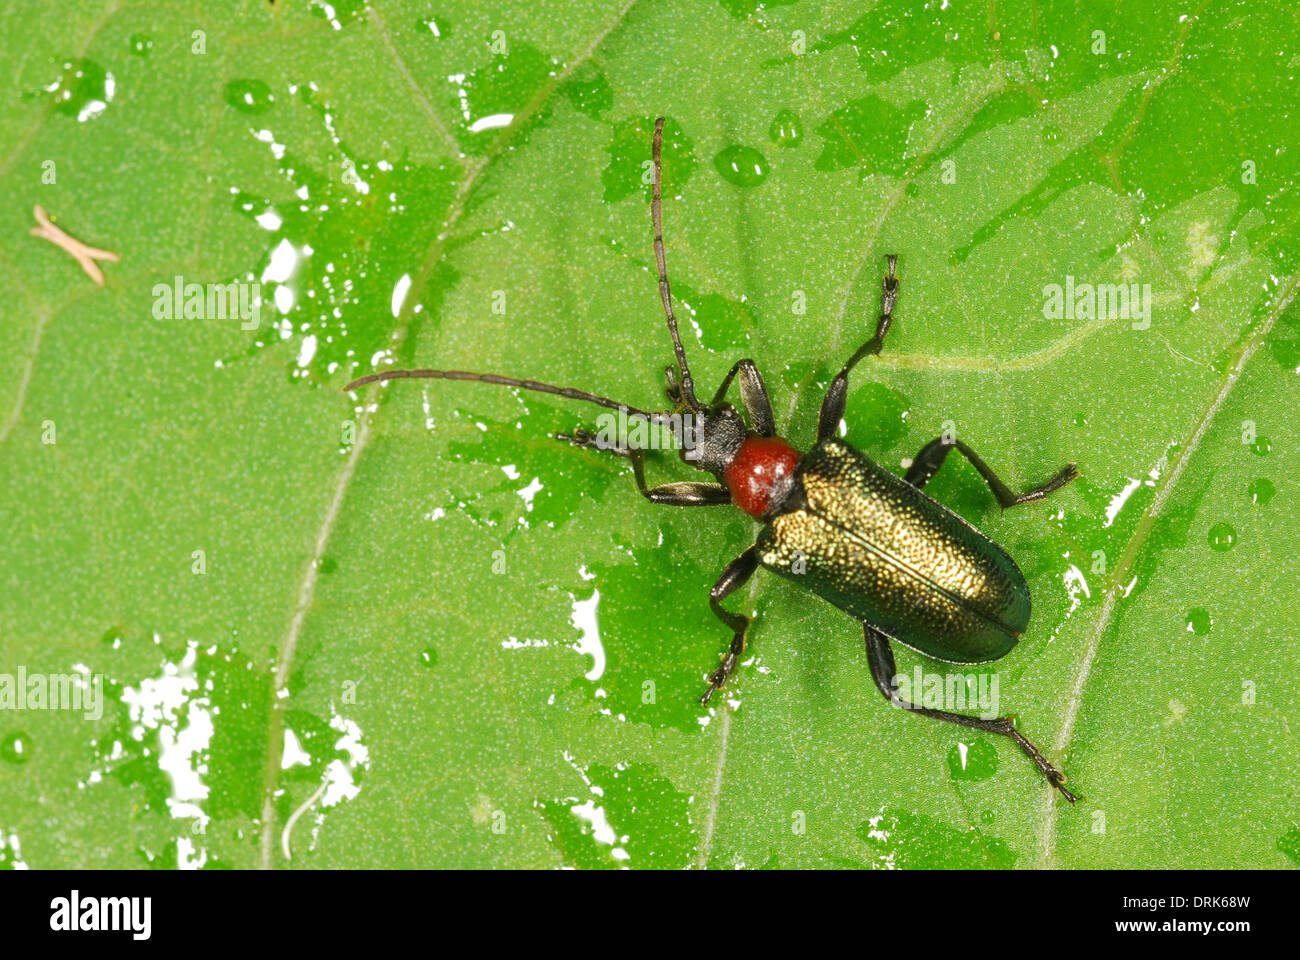 European Long-horned Beetle (Carilia virginea) on a leaf Stock Photo